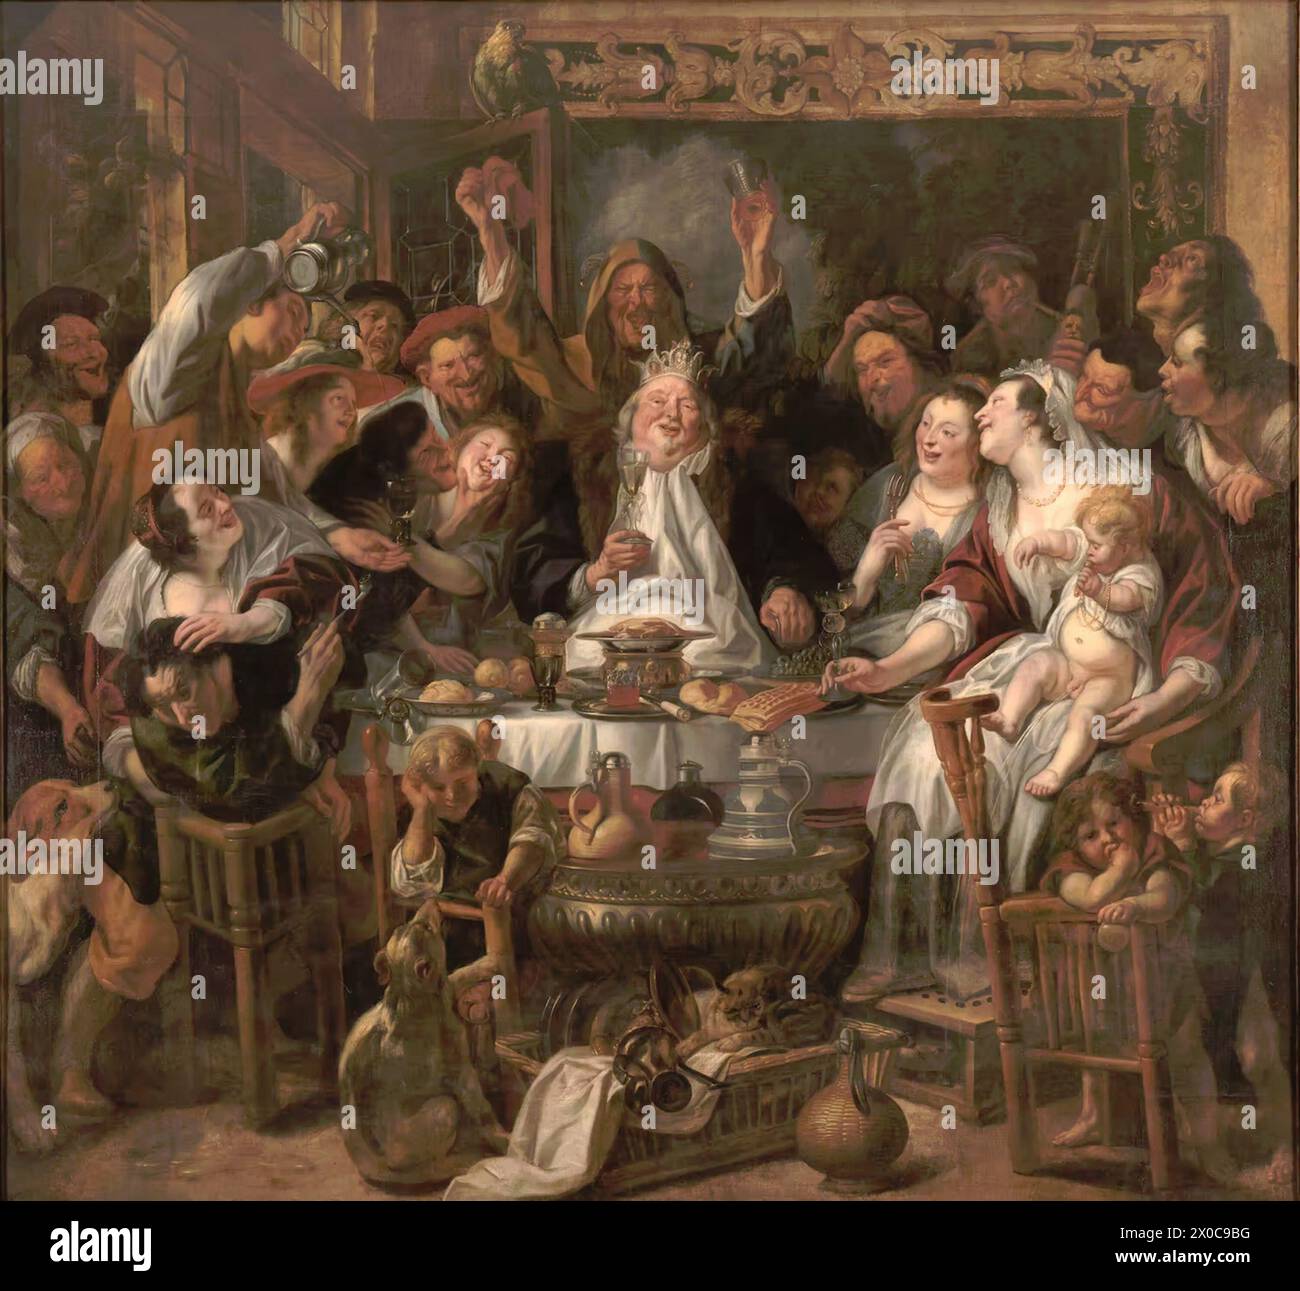 Jacob Jordaens - der König trinkt - Brüsseler Barockmalerei Stockfoto